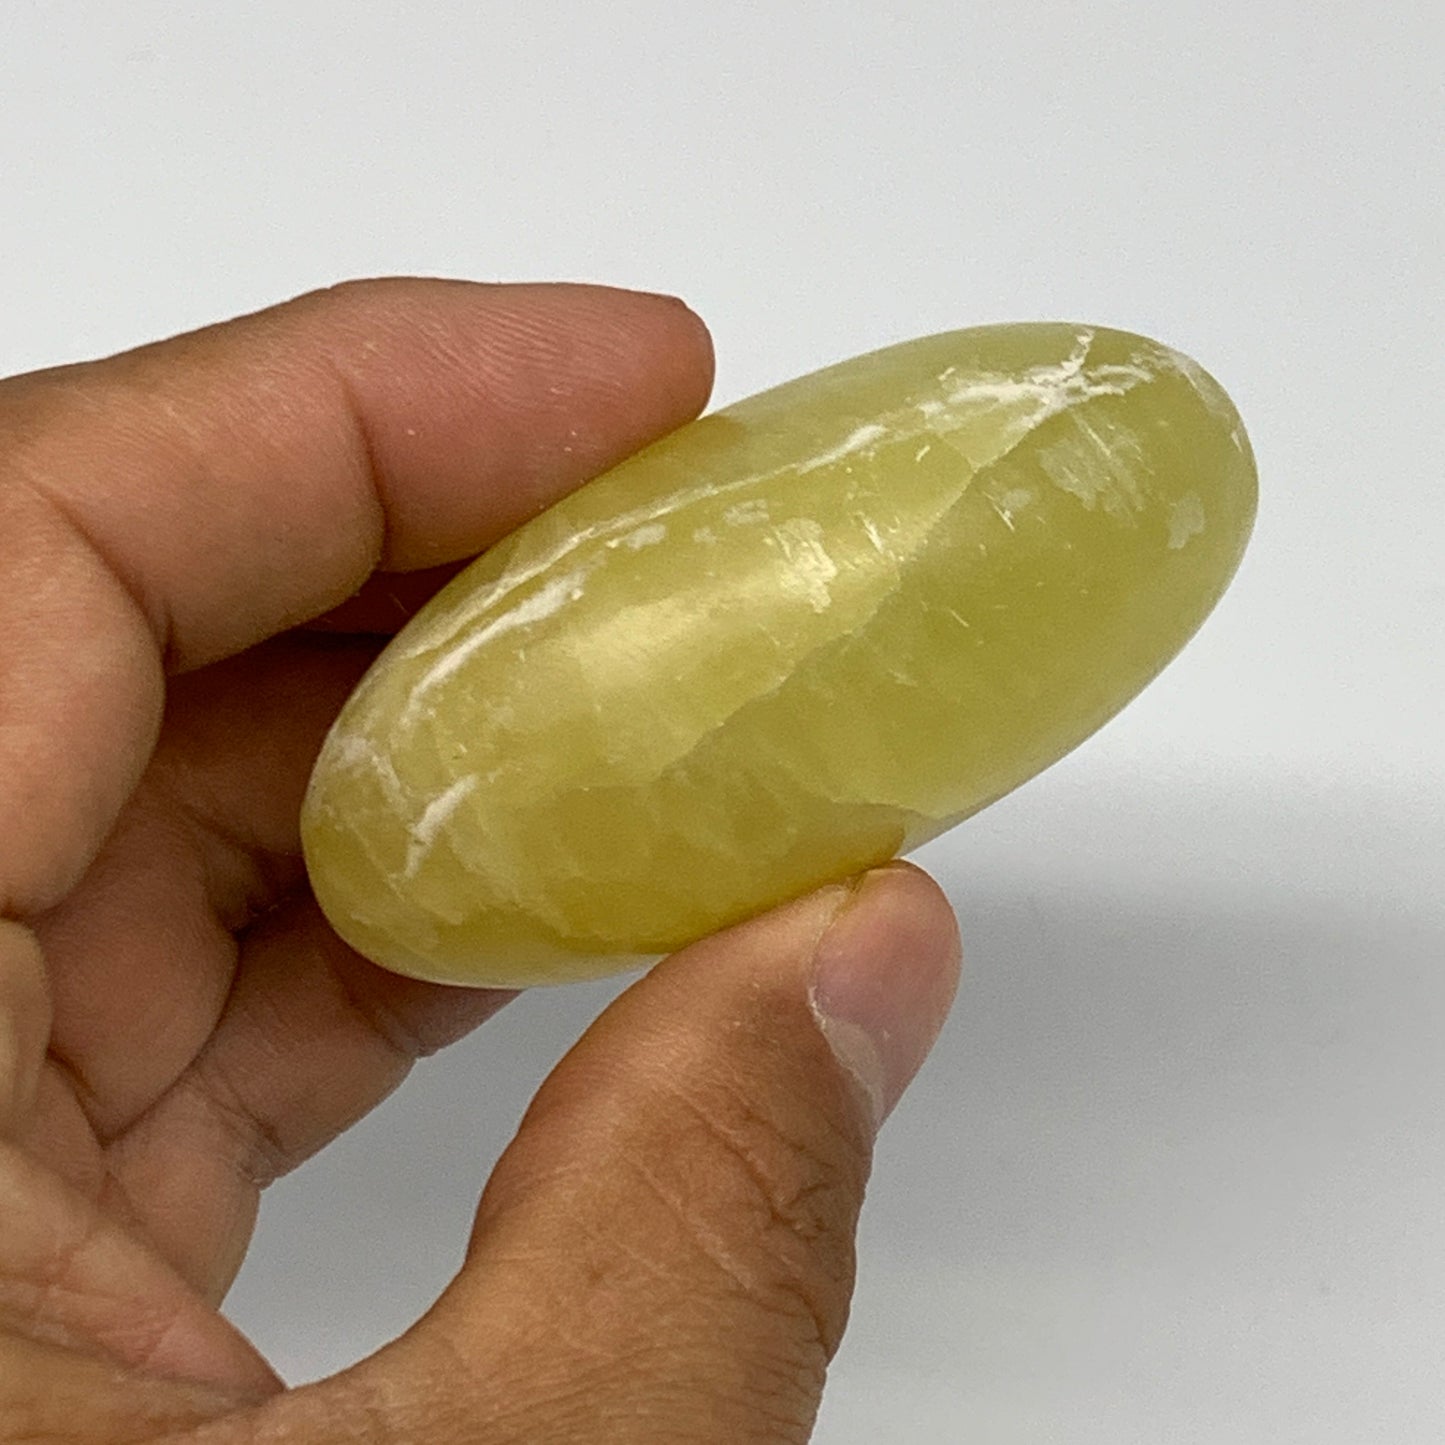 108.4g, 2.4"x1.7"x1", Lemon Calcite Palm-Stone Crystal Polished @Pakistan,B26455